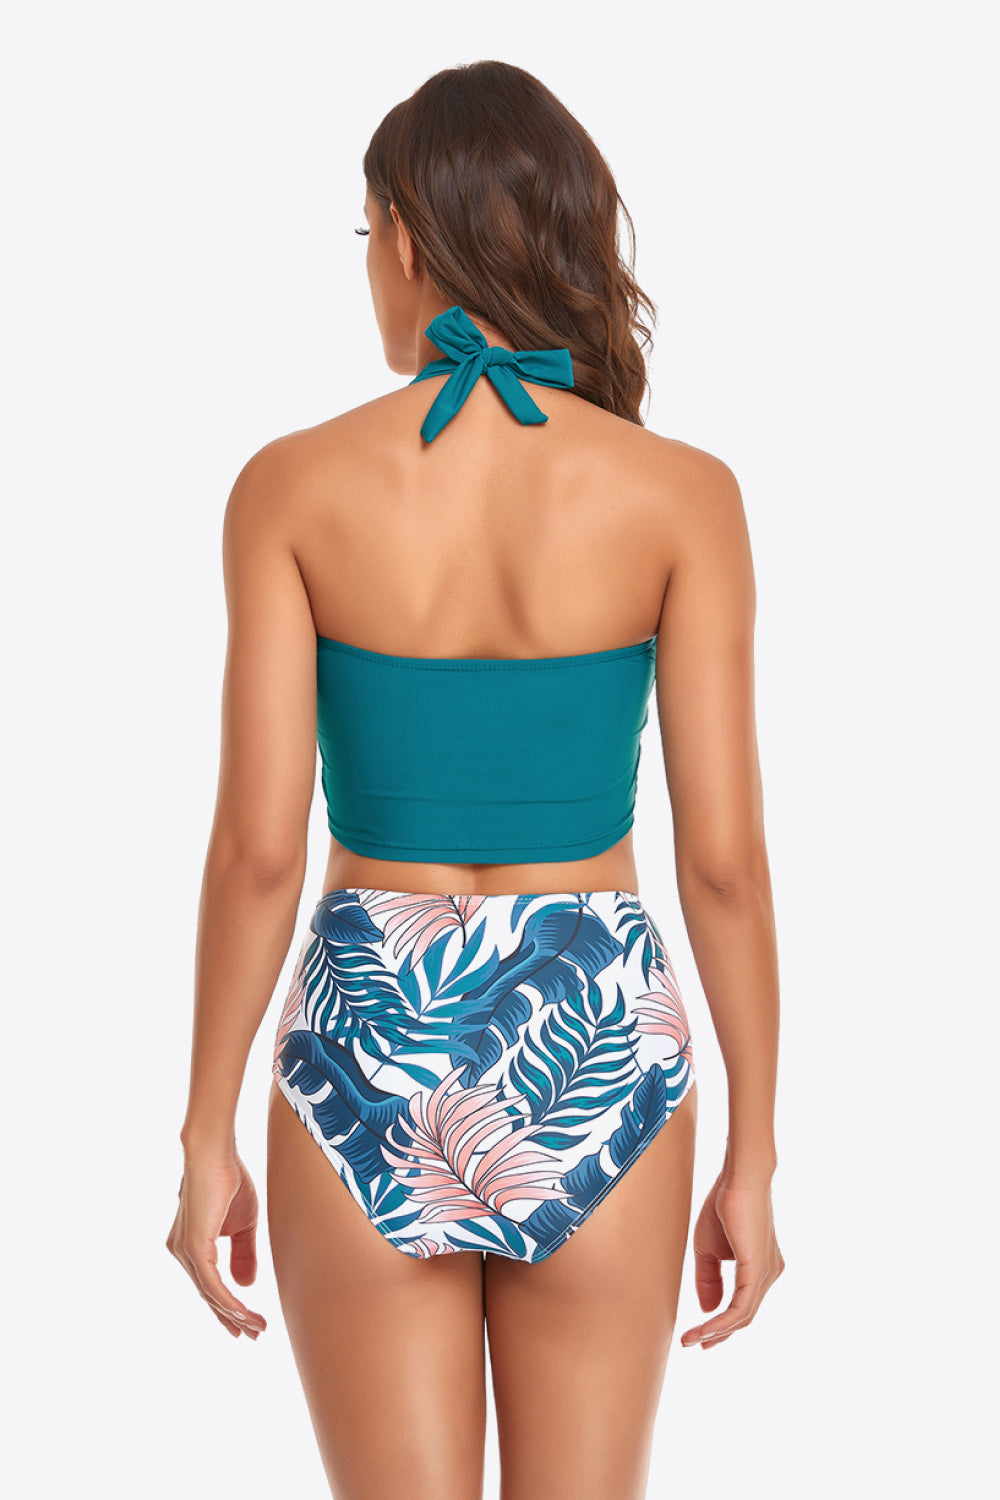 Botanical Print Halter Neck Drawstring Detail Bikini Set  Sunset and Swim   